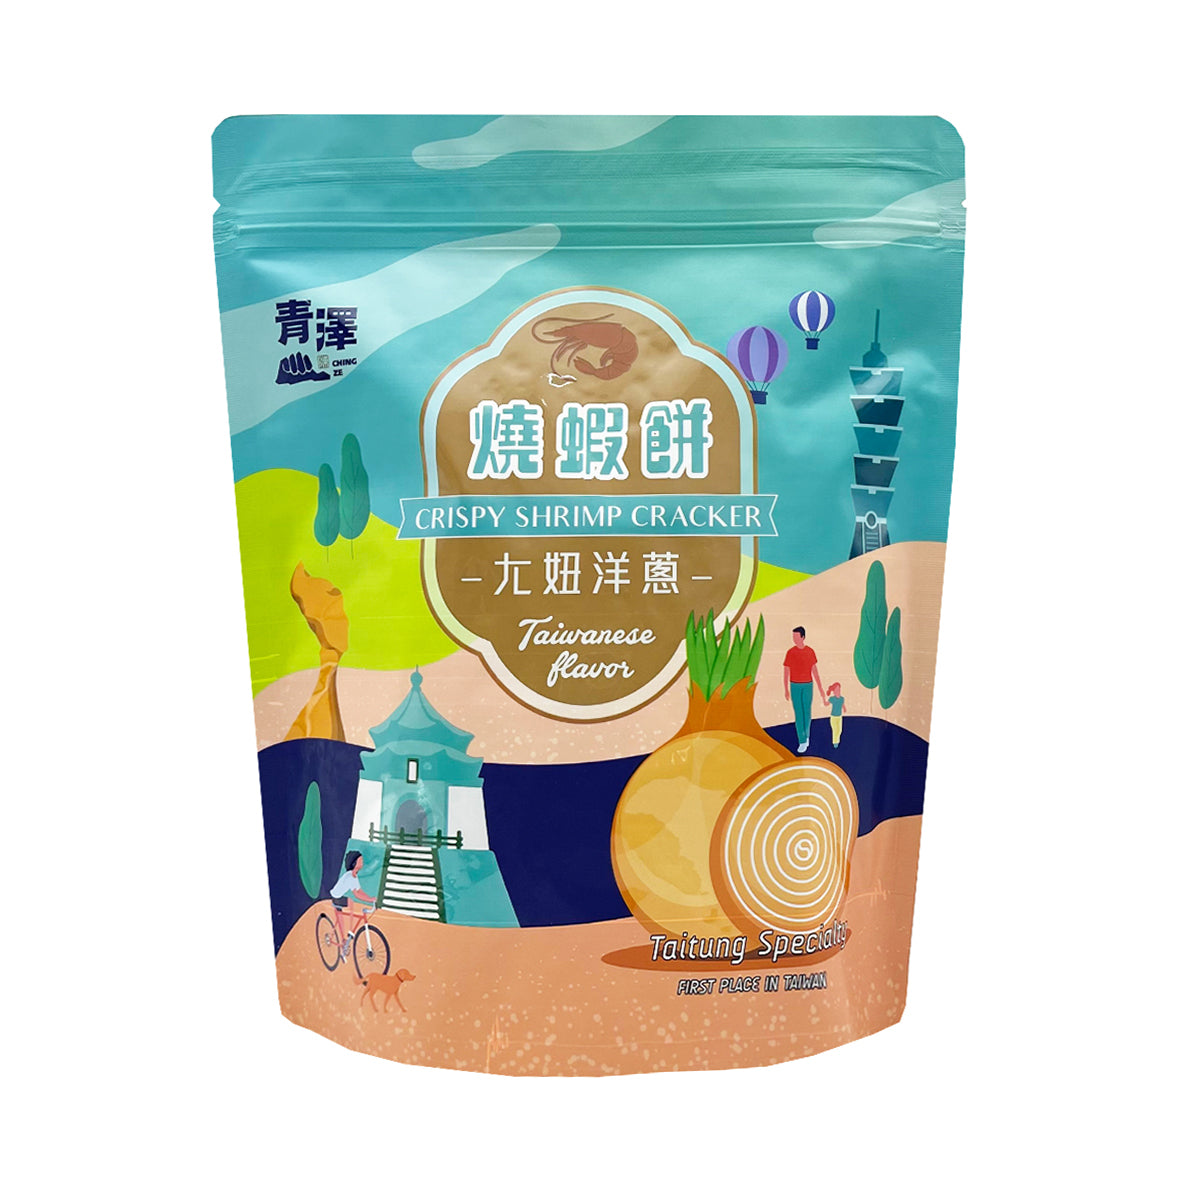 【CHING TSE】 Crispy Shrimp Cracker (Taiwanese Flavor - Onion) 100g